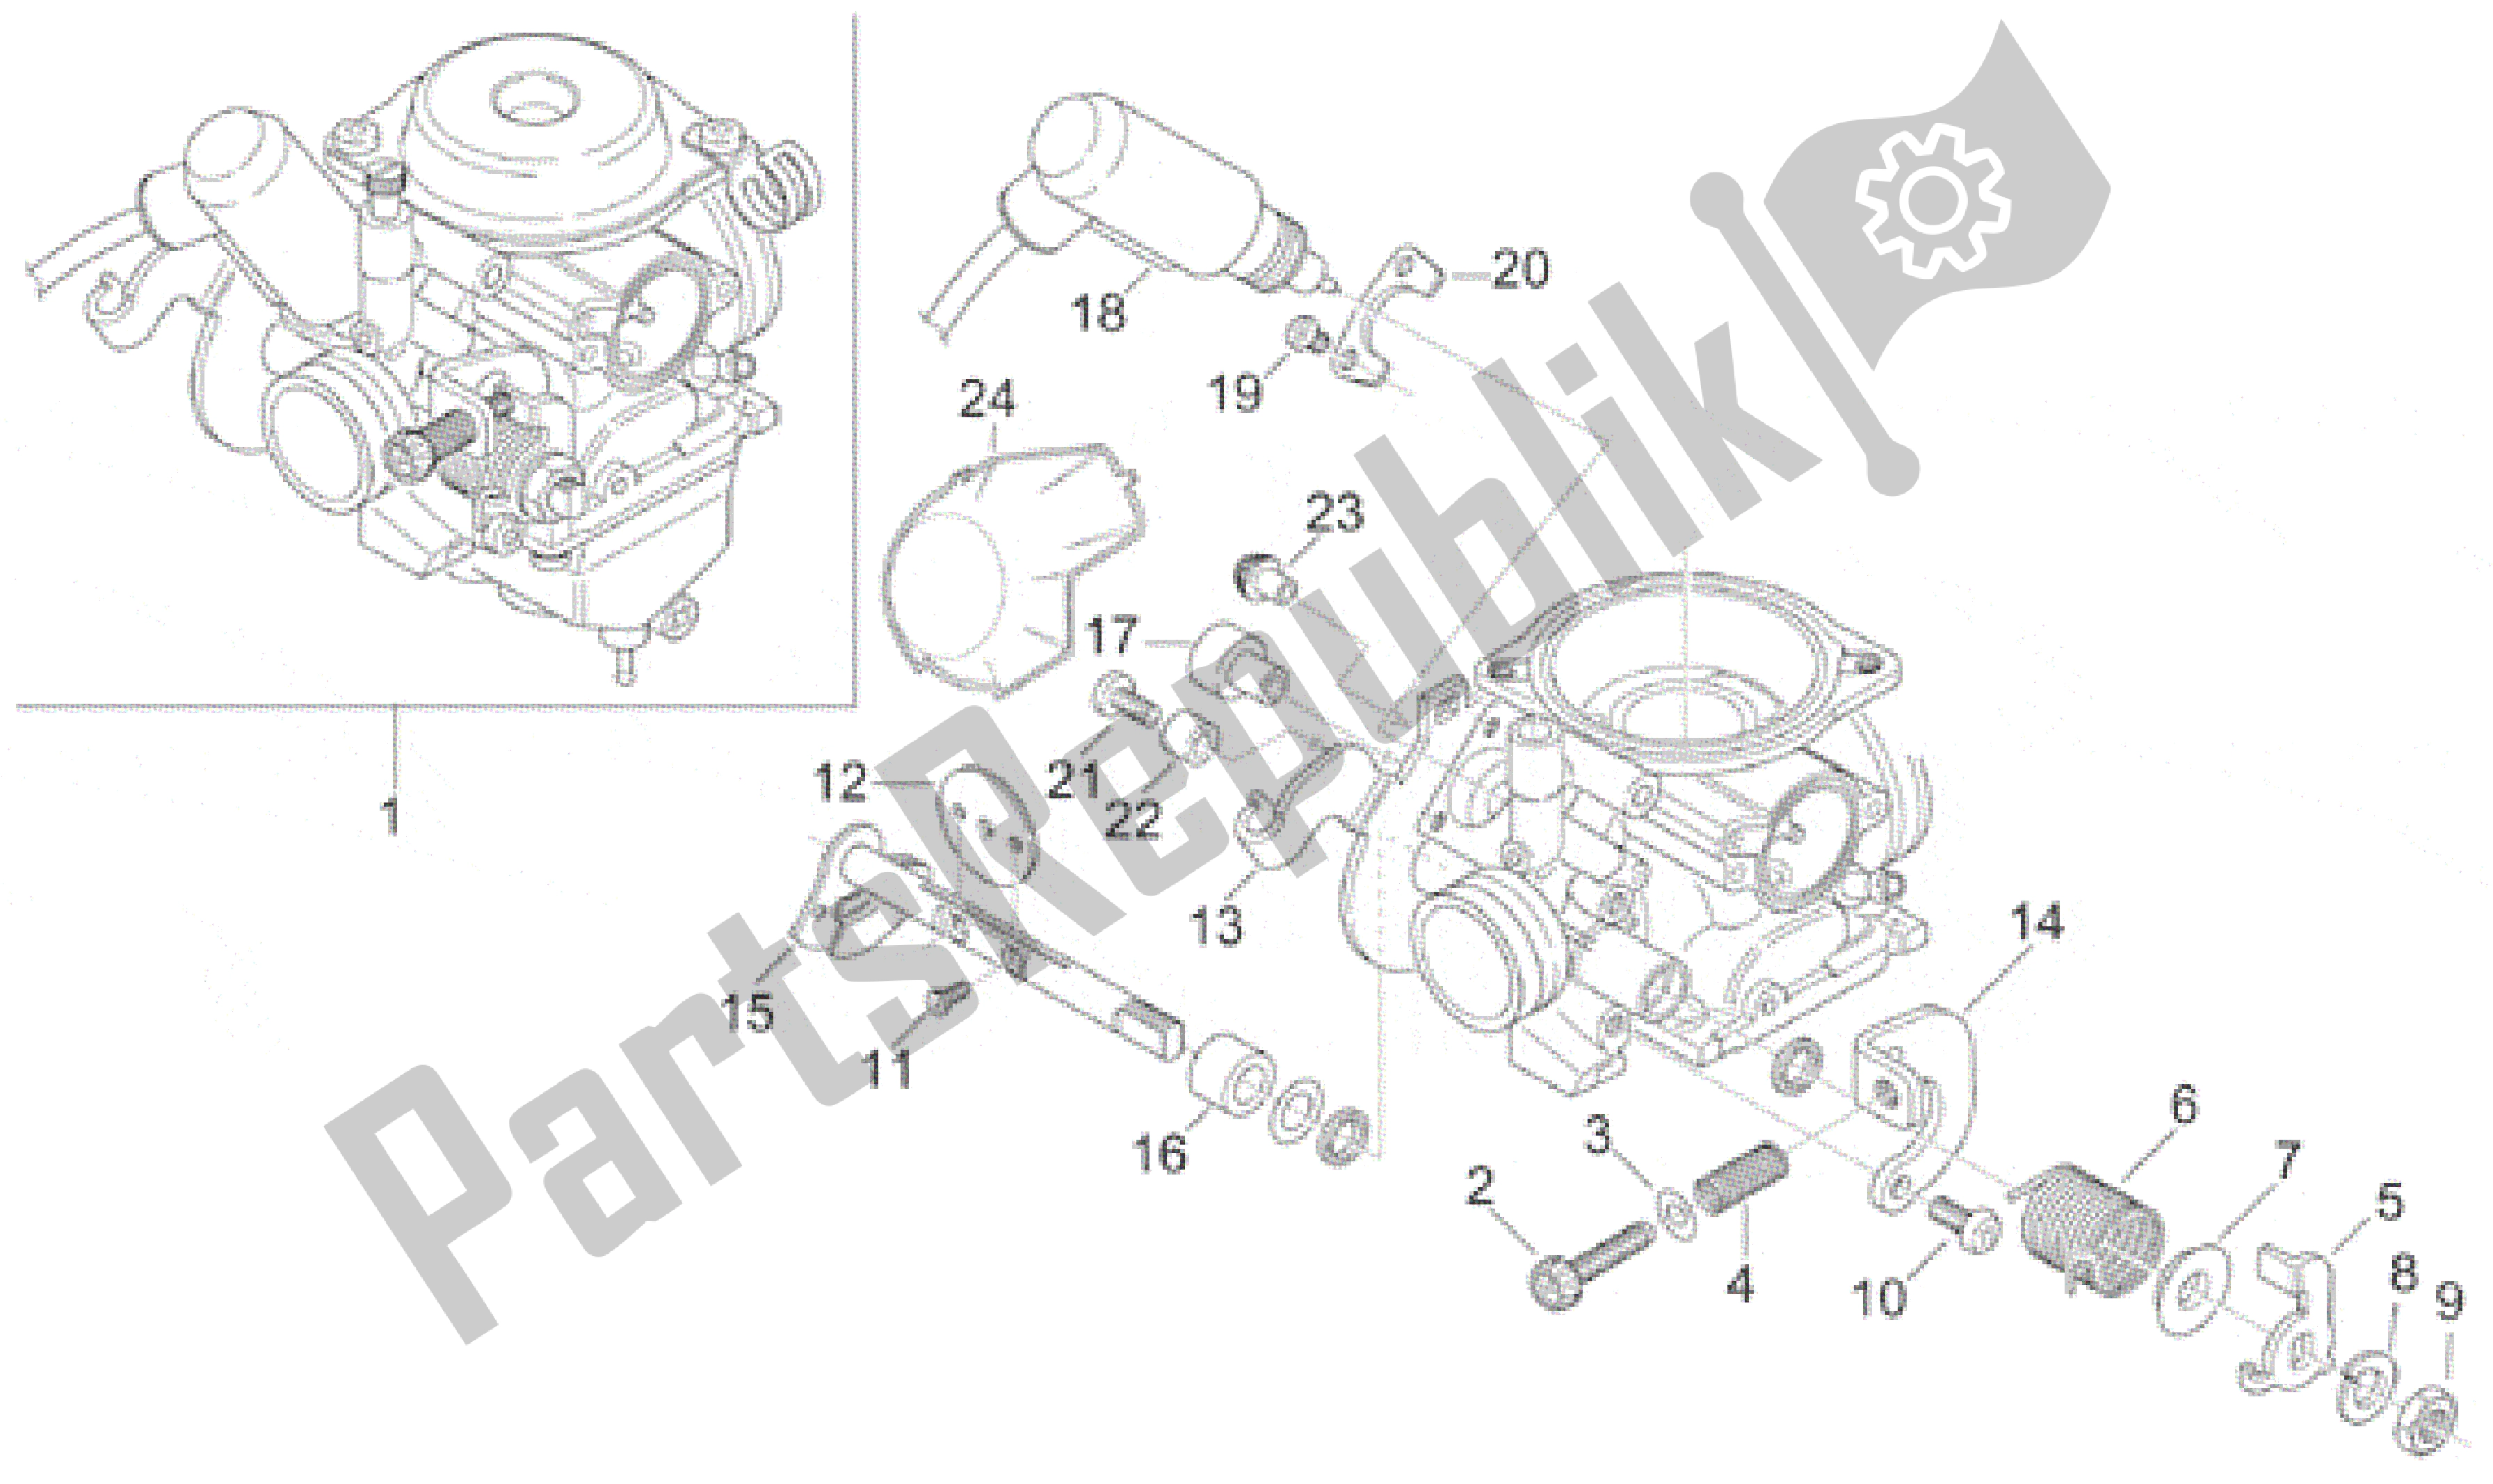 All parts for the Carburettor Ii of the Aprilia Leonardo 125 1999 - 2001